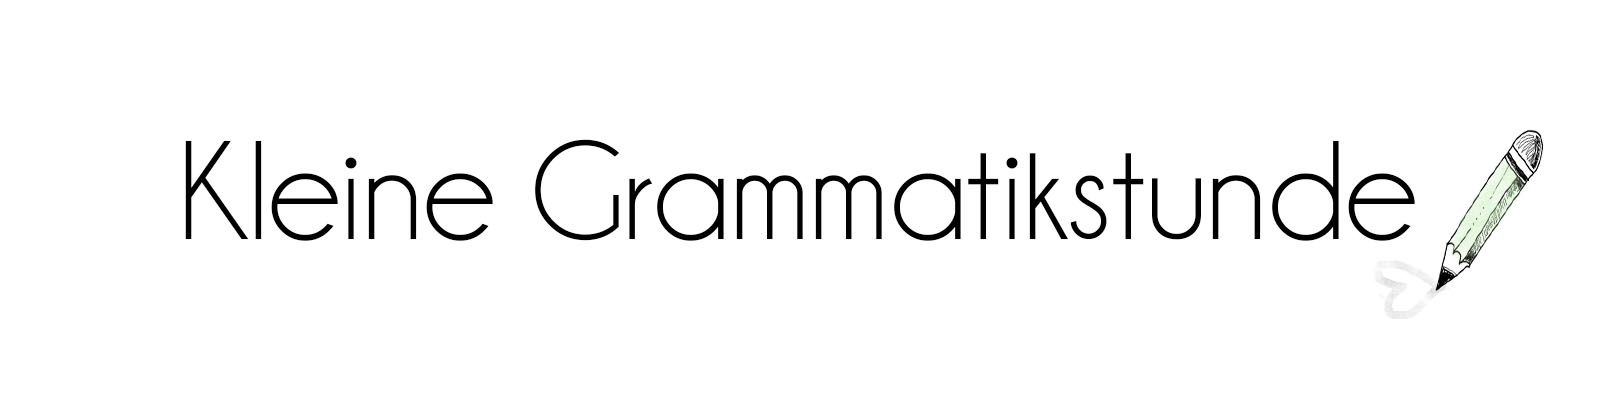 grammatik